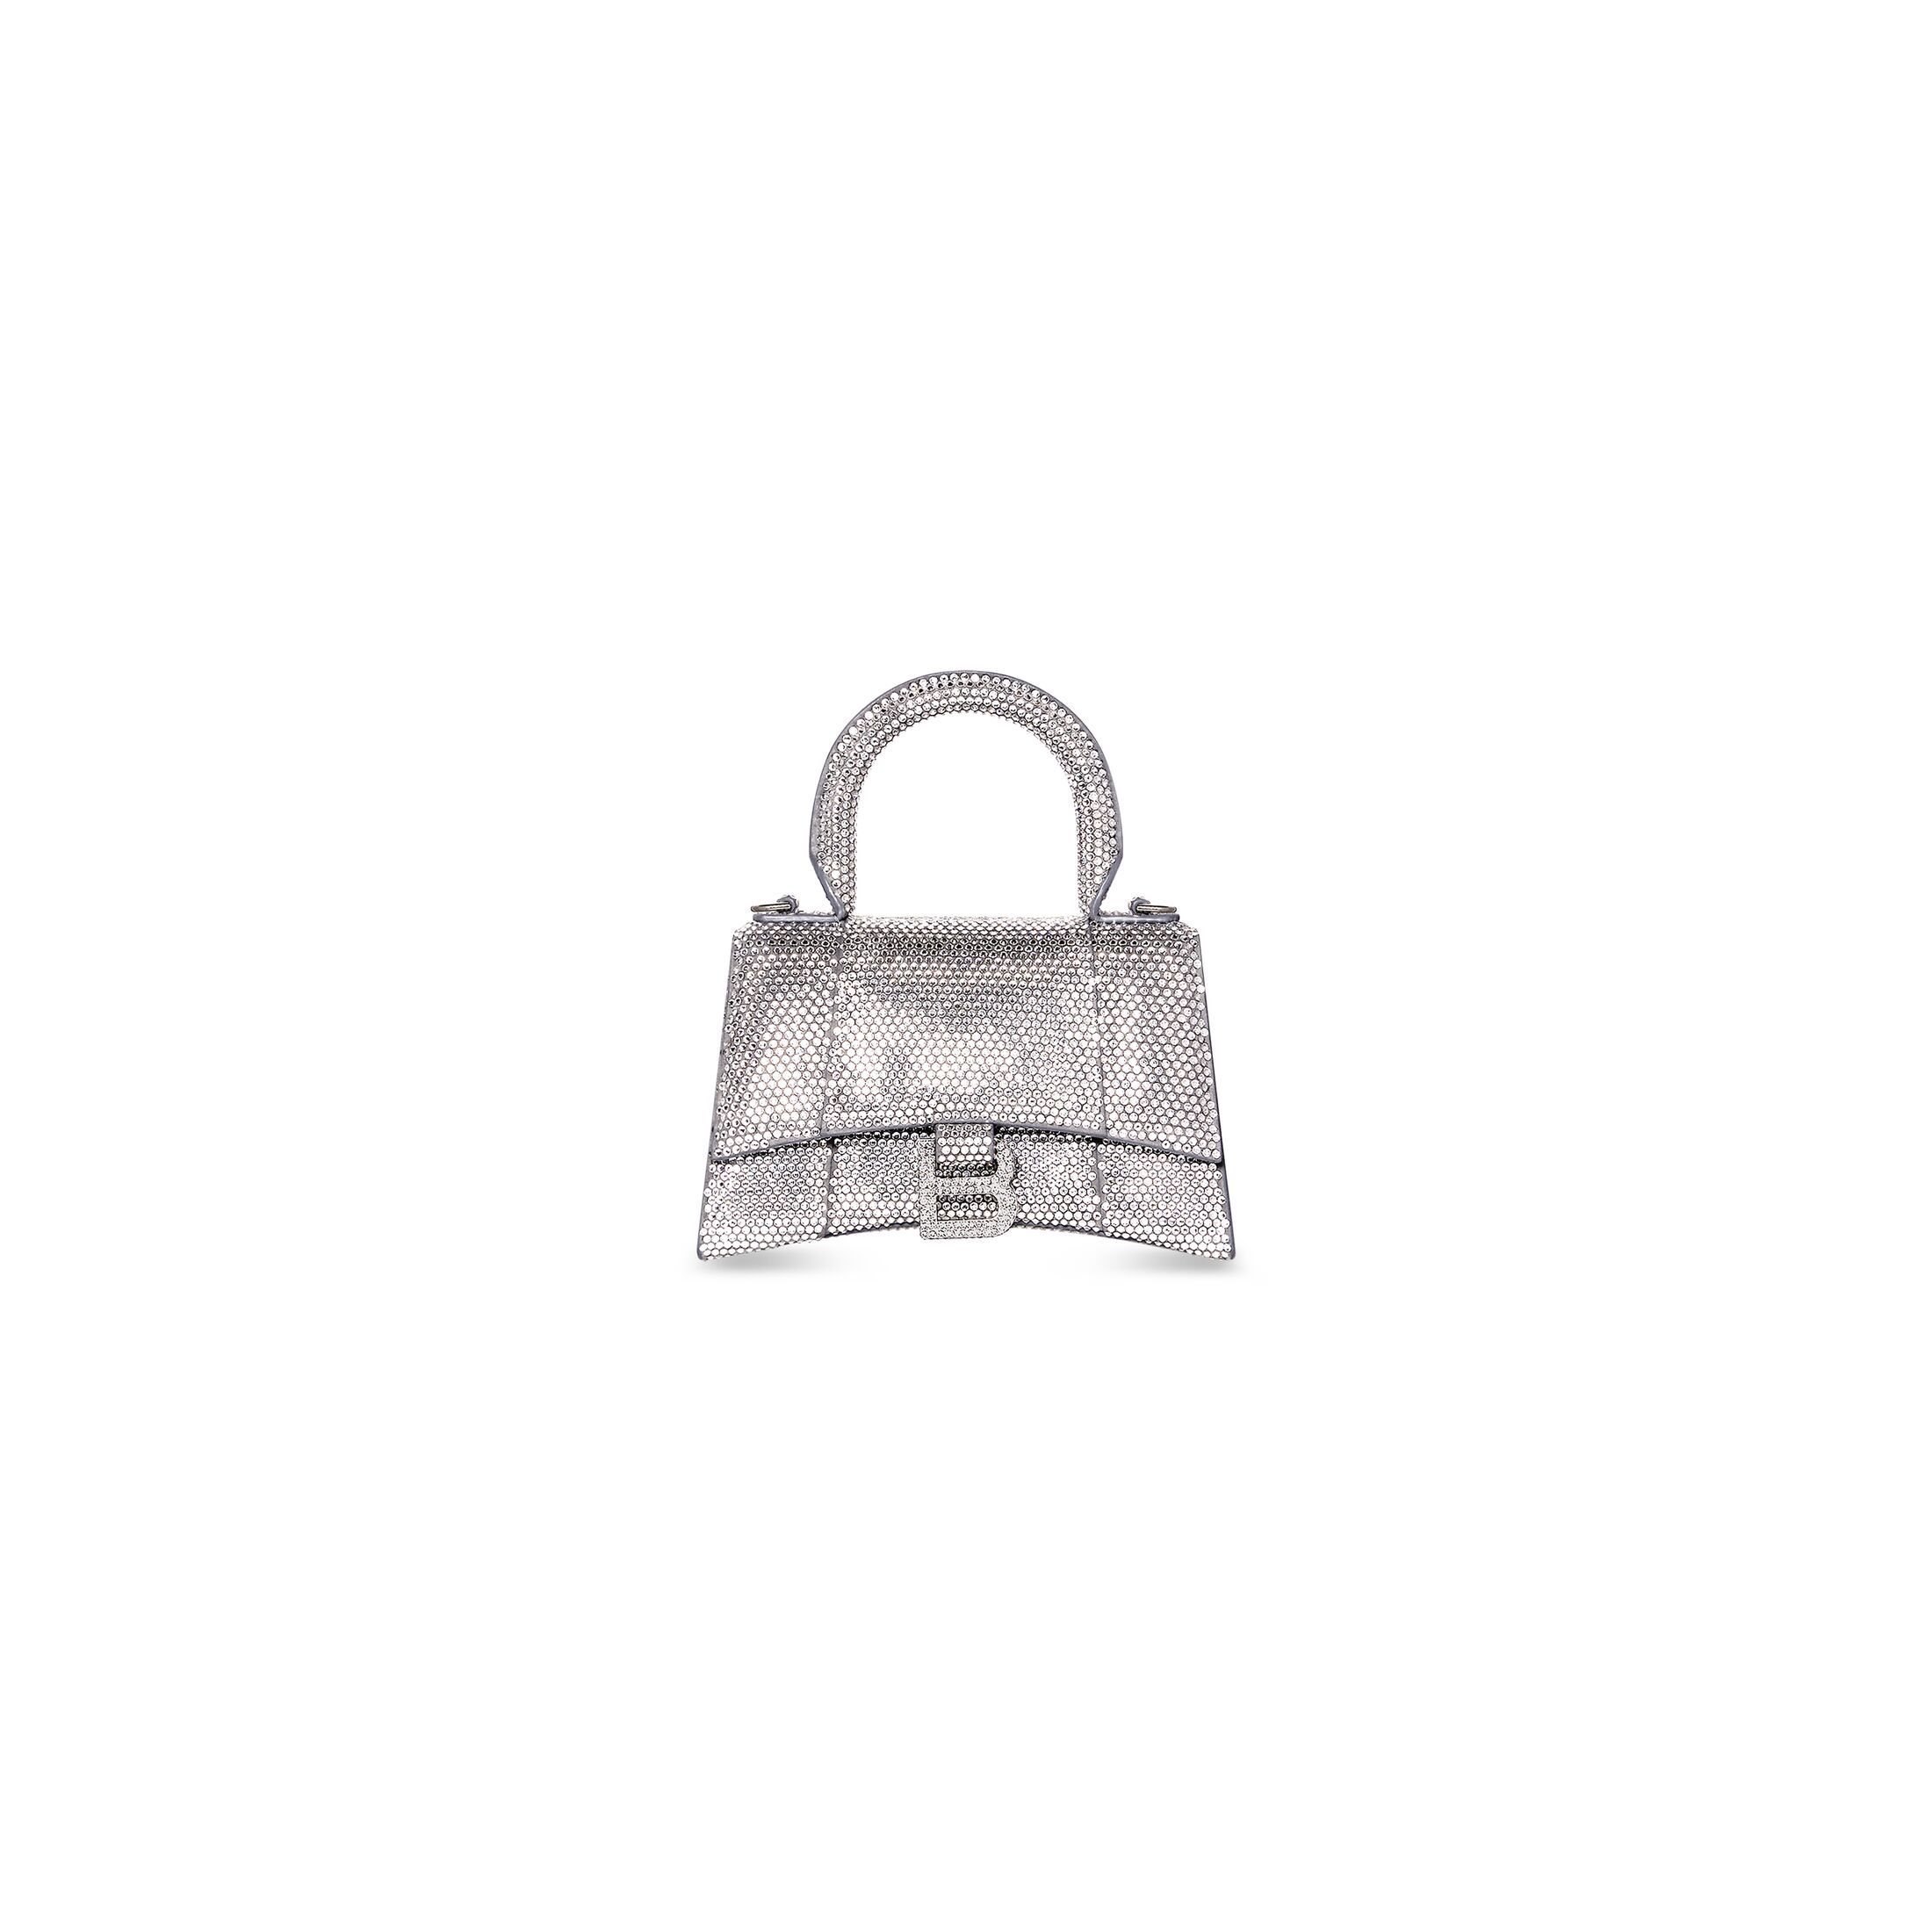 hourglass xs handbag in suede calfskin with rhinestones | Balenciaga